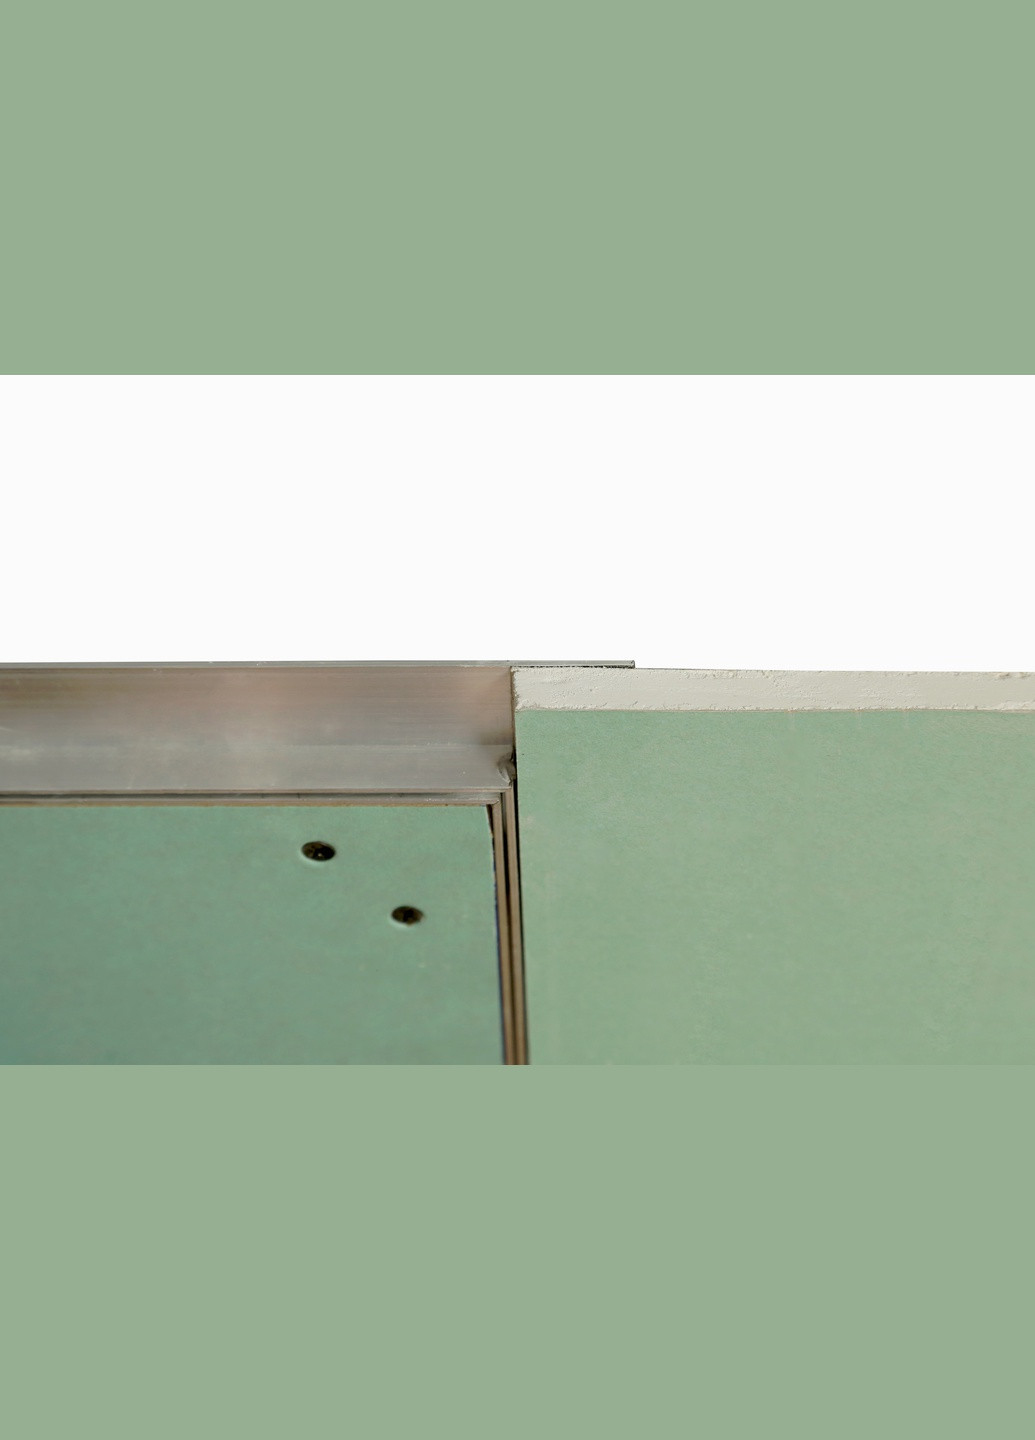 Ревизионный люк скрытого монтажа под покраску (поклейку обоев) типа СТАНДАРТ 300x300 (1401) S-Dom (264208770)